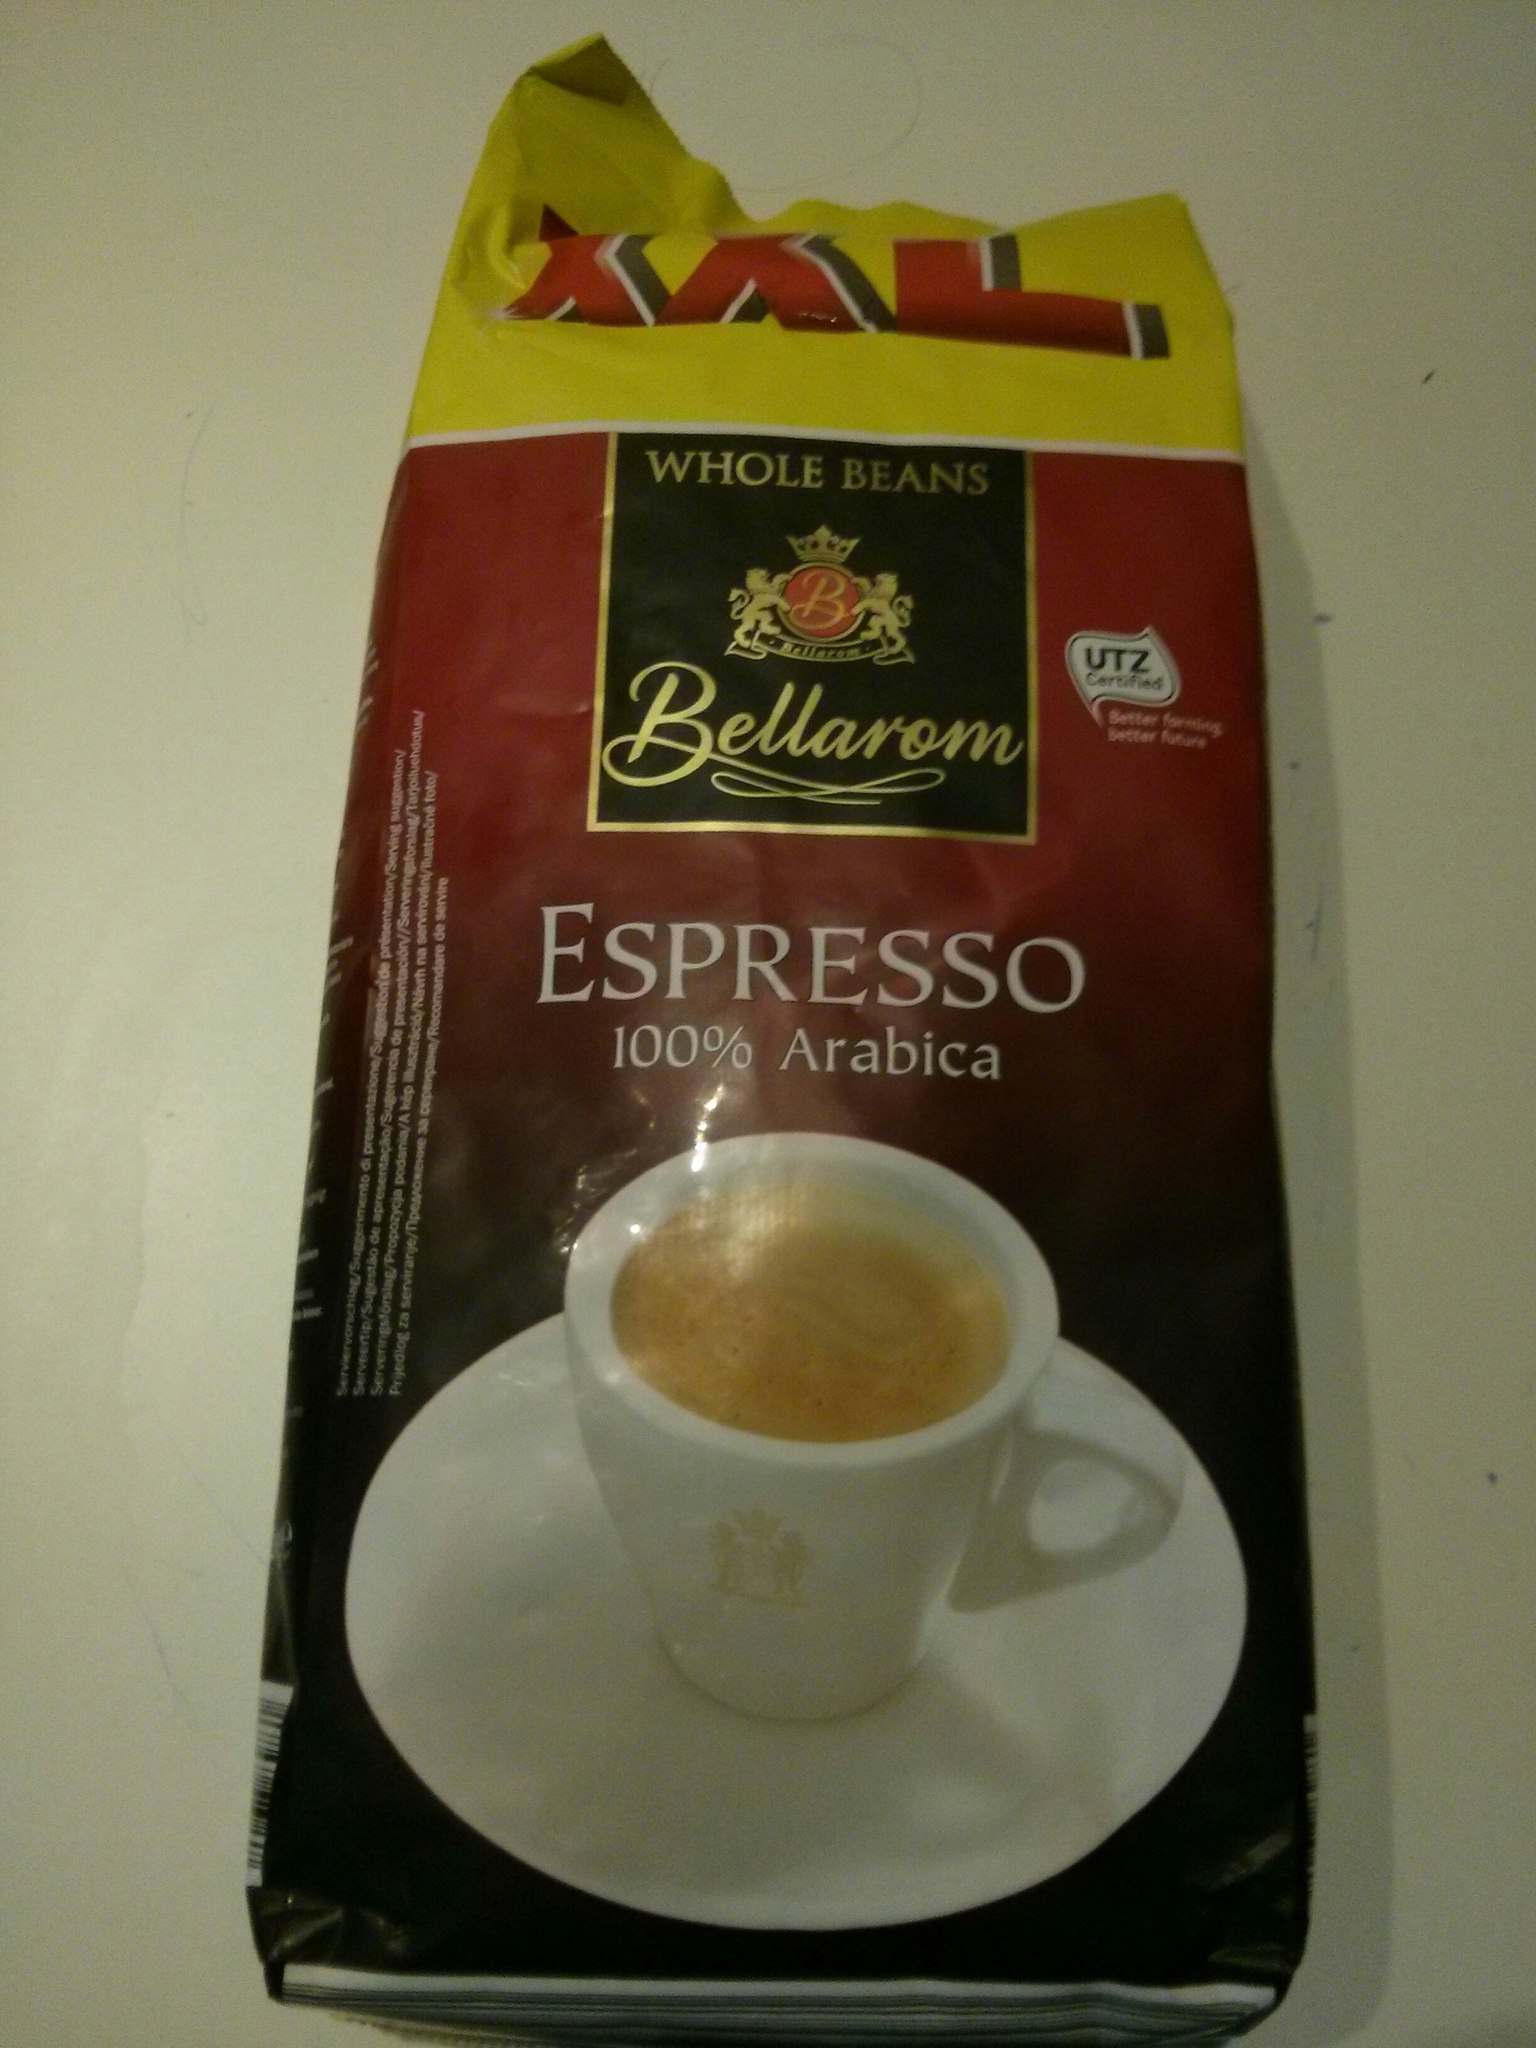    Bellarom Espresso 100% Arabica 1,2 